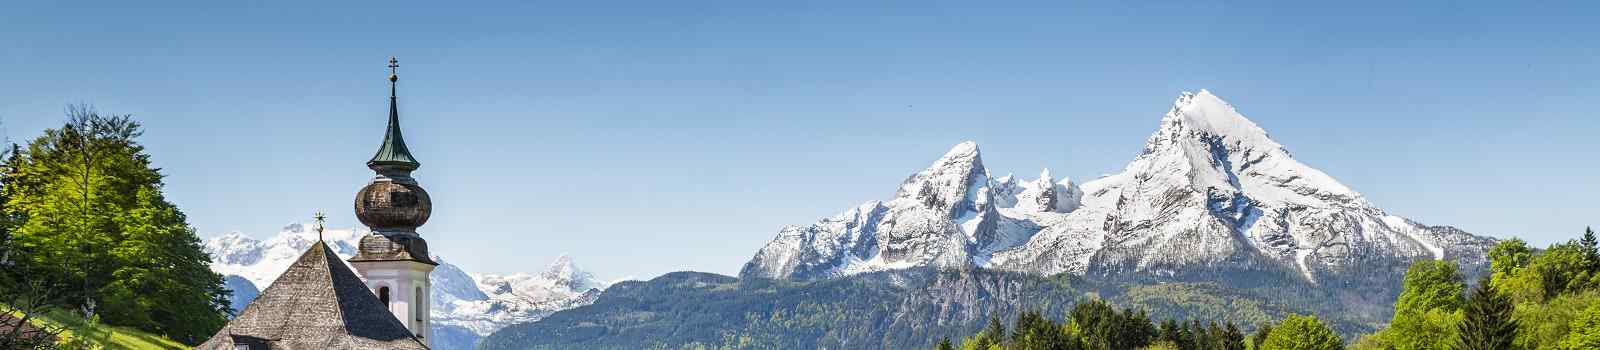 WAN-KS-HK Bayern Berchtesgaden mit Watzmann Panorama 206336812